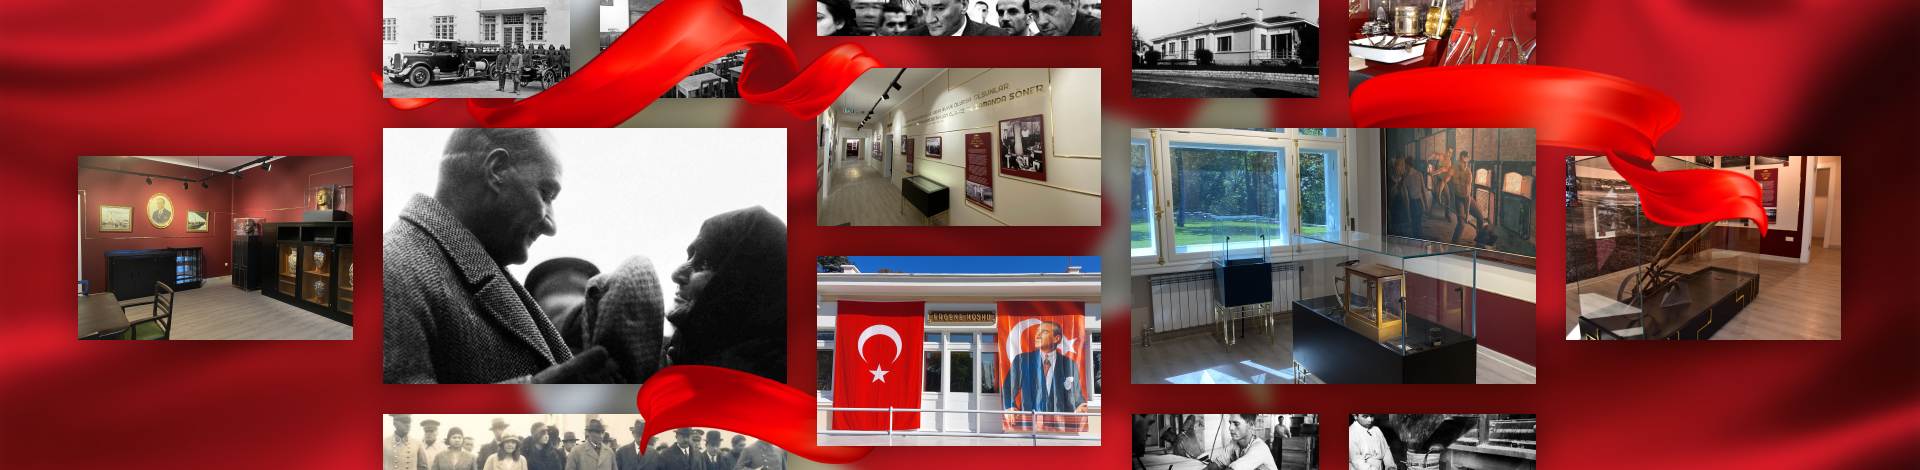 Atatürk Industrial Museum